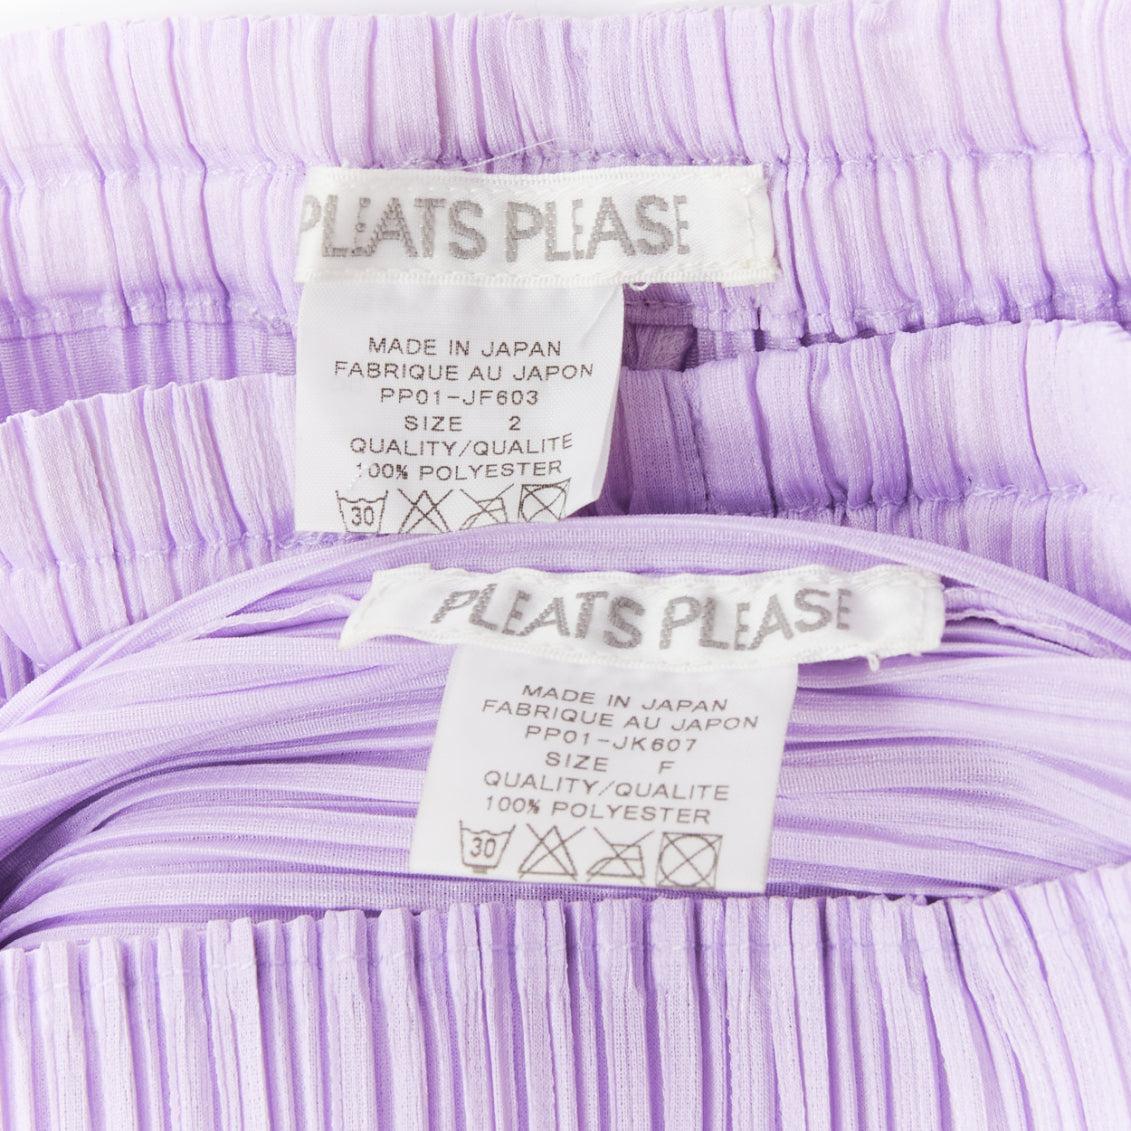 ISSEY MIYAKE Pleats Please lilac purple plisse tank top slim pants set F 7